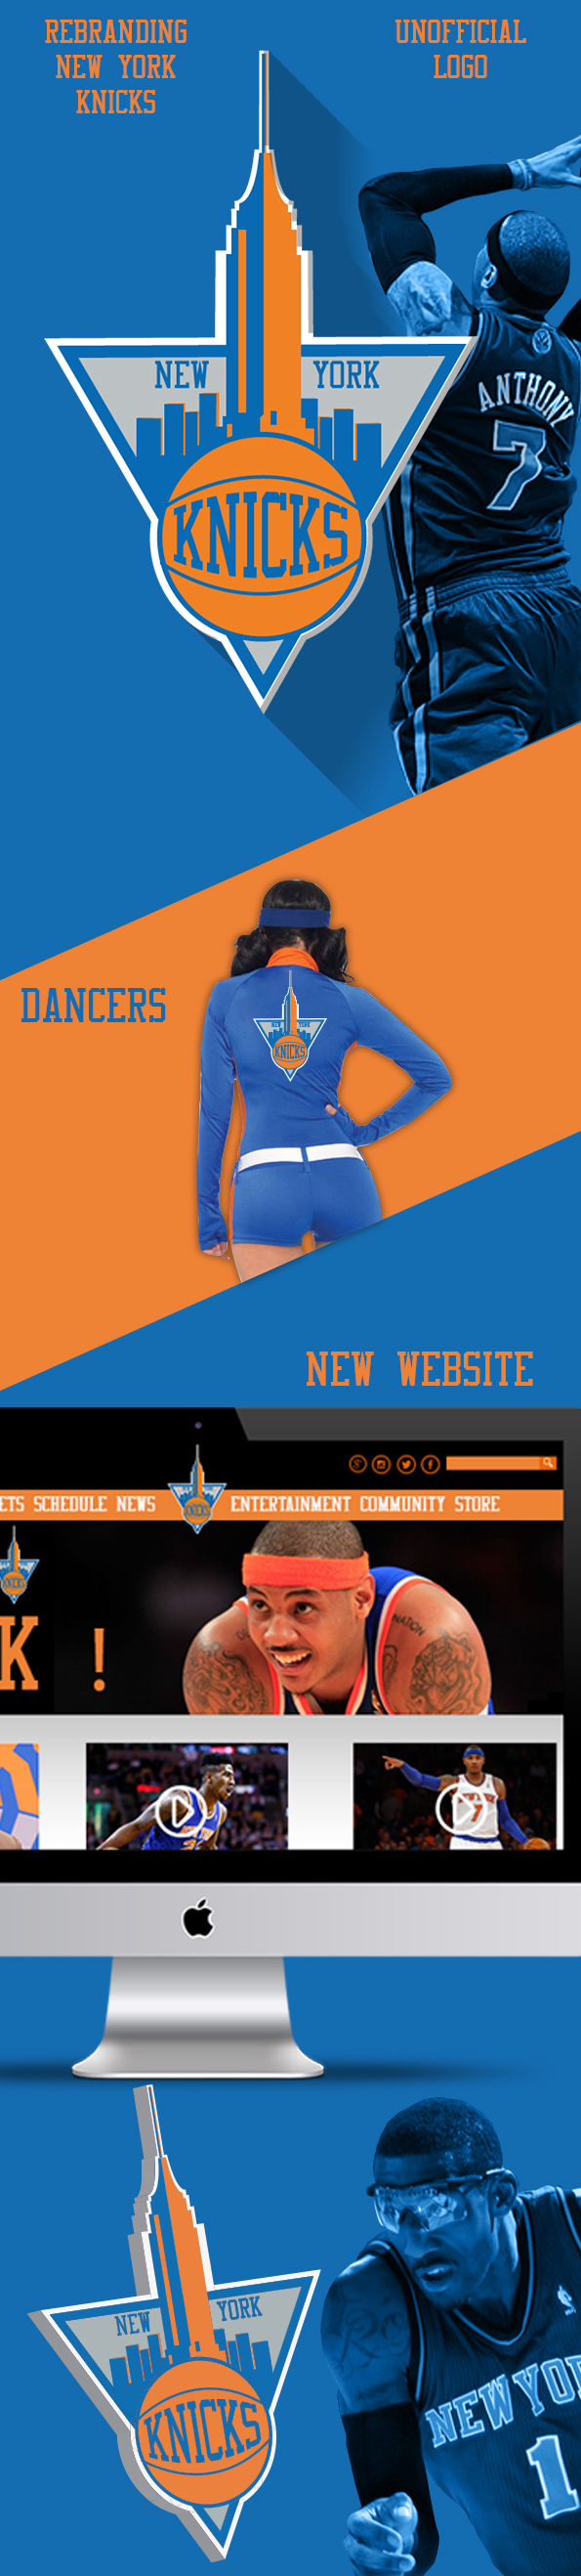 New York Knicks NBA basketball rebranding newyork logo logo nba logo knicks new carmelo Anthony